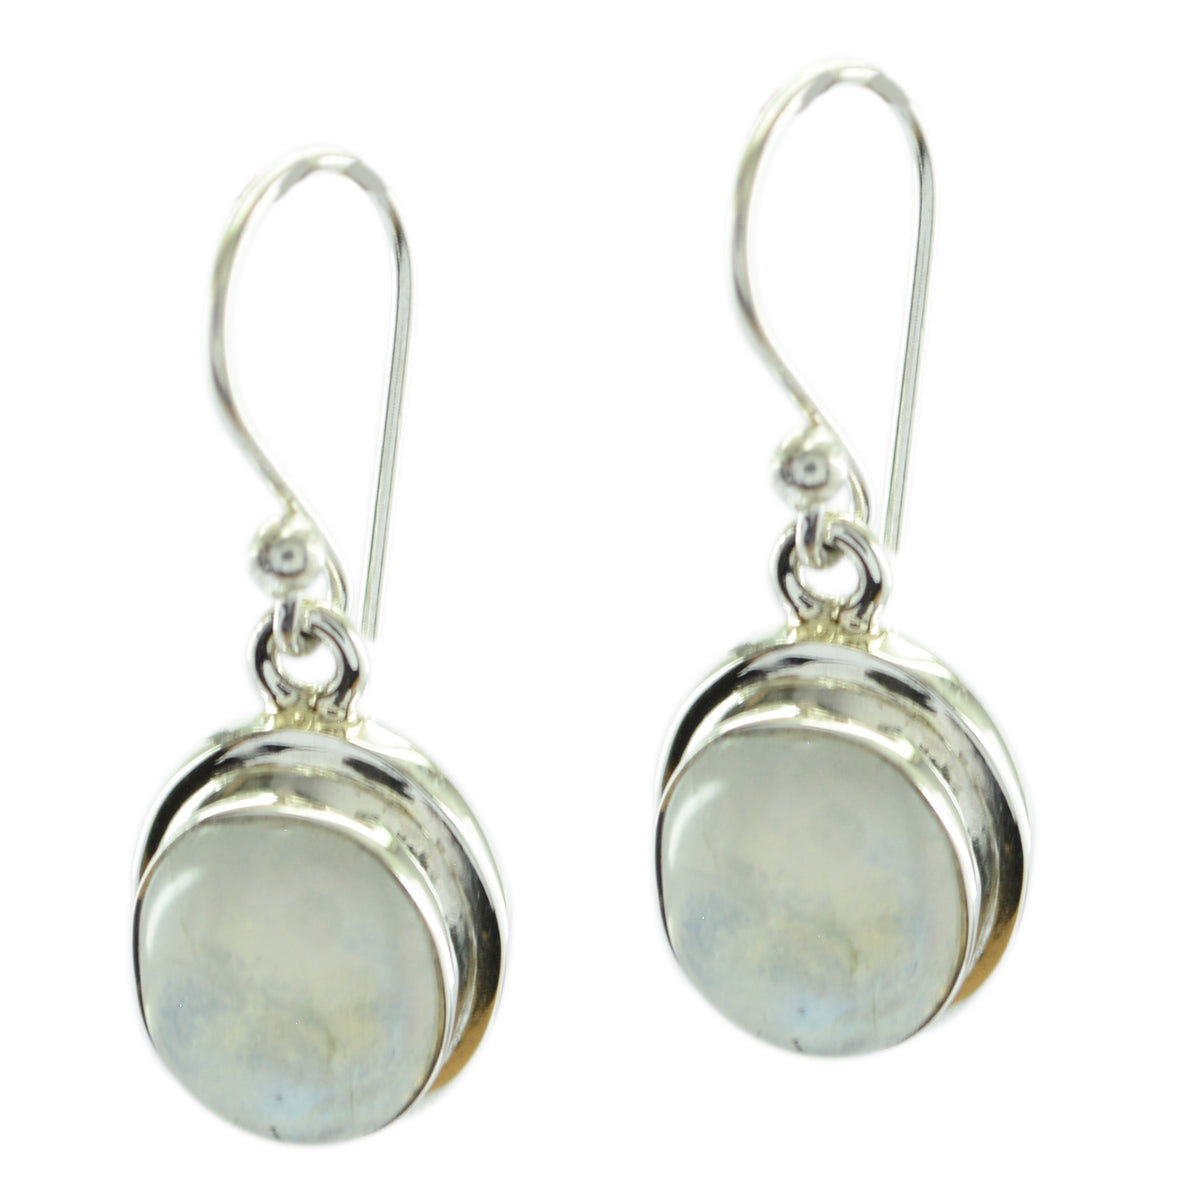 Riyo Natural Gemstone round Cabochon White Rainbow Moonstone Silver Earrings gift for mom birthday